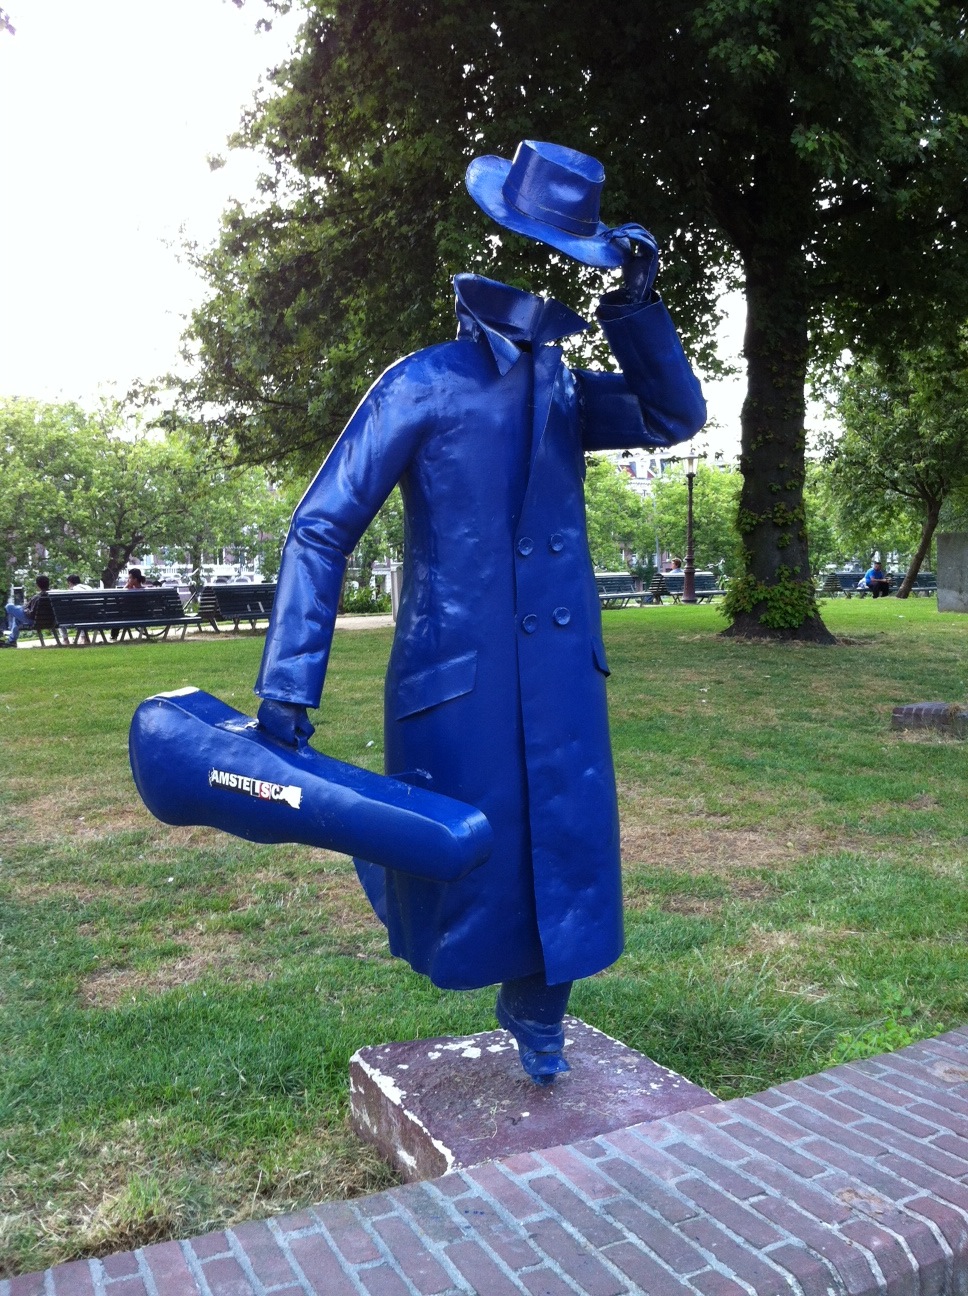 headless blue musician, Amsterdam